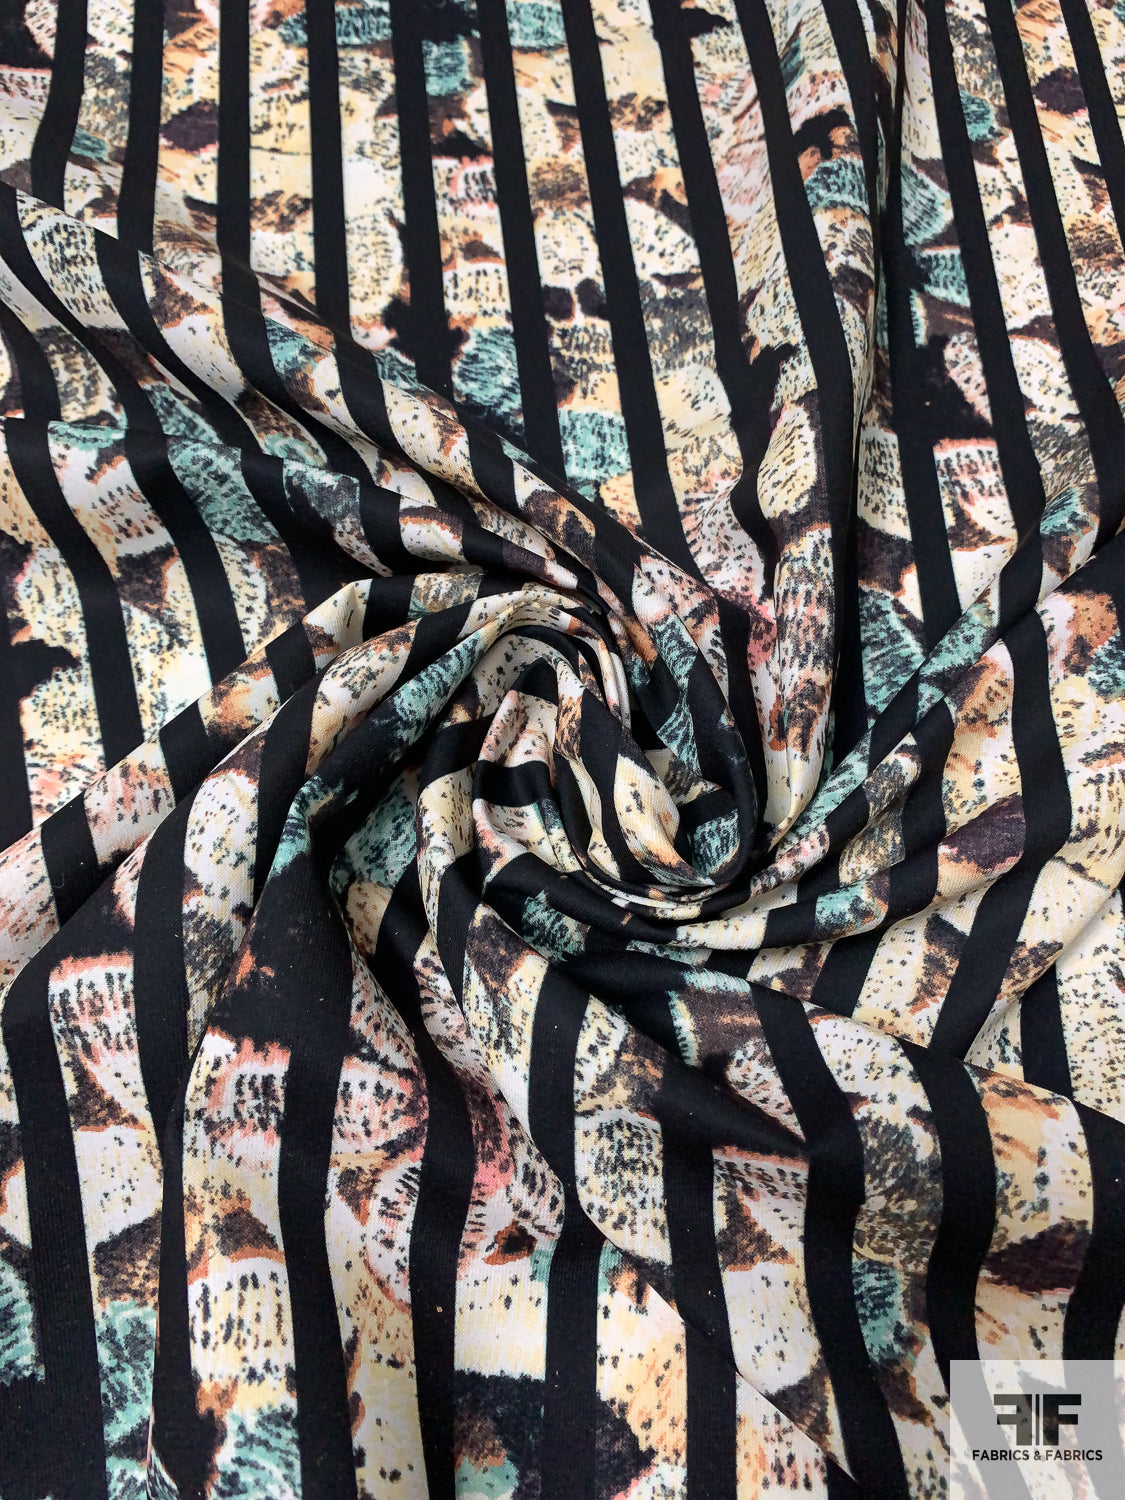 Barred Floral Printed Polyester Crepe - Black / Seafoam / Earth Tones